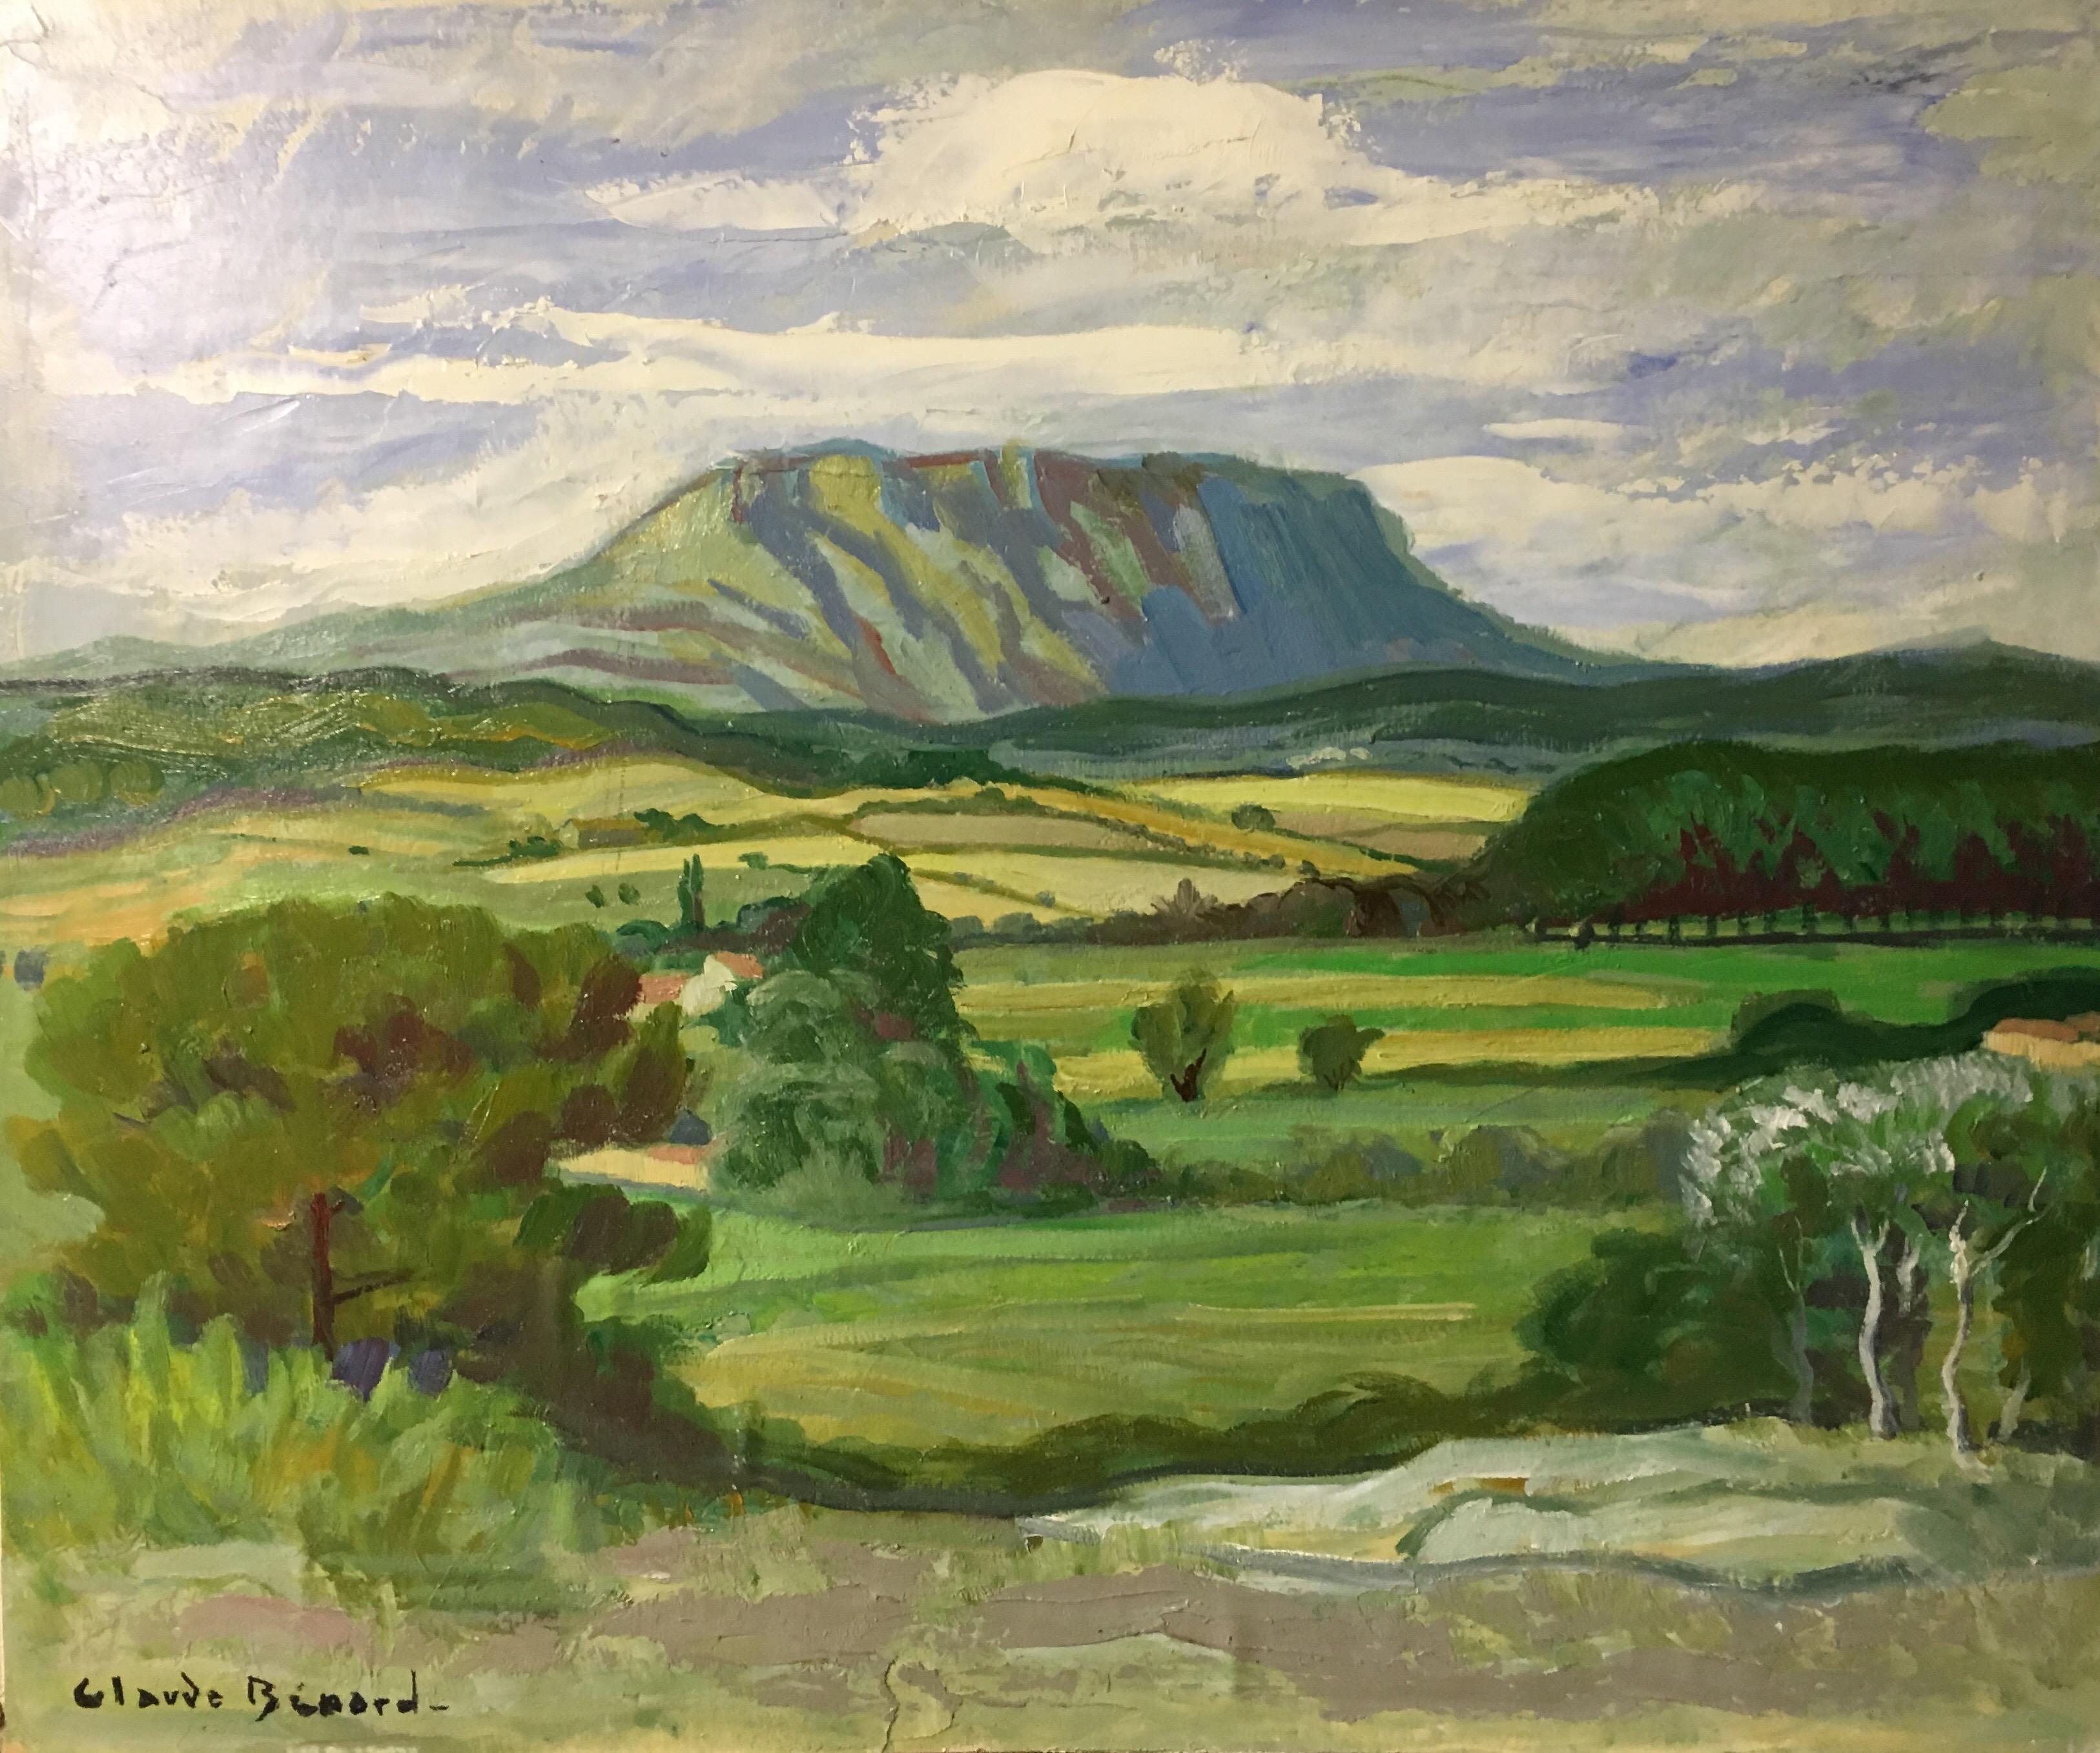 St. Victoire Impressionist Rural Landscape, Signed Oil Painting